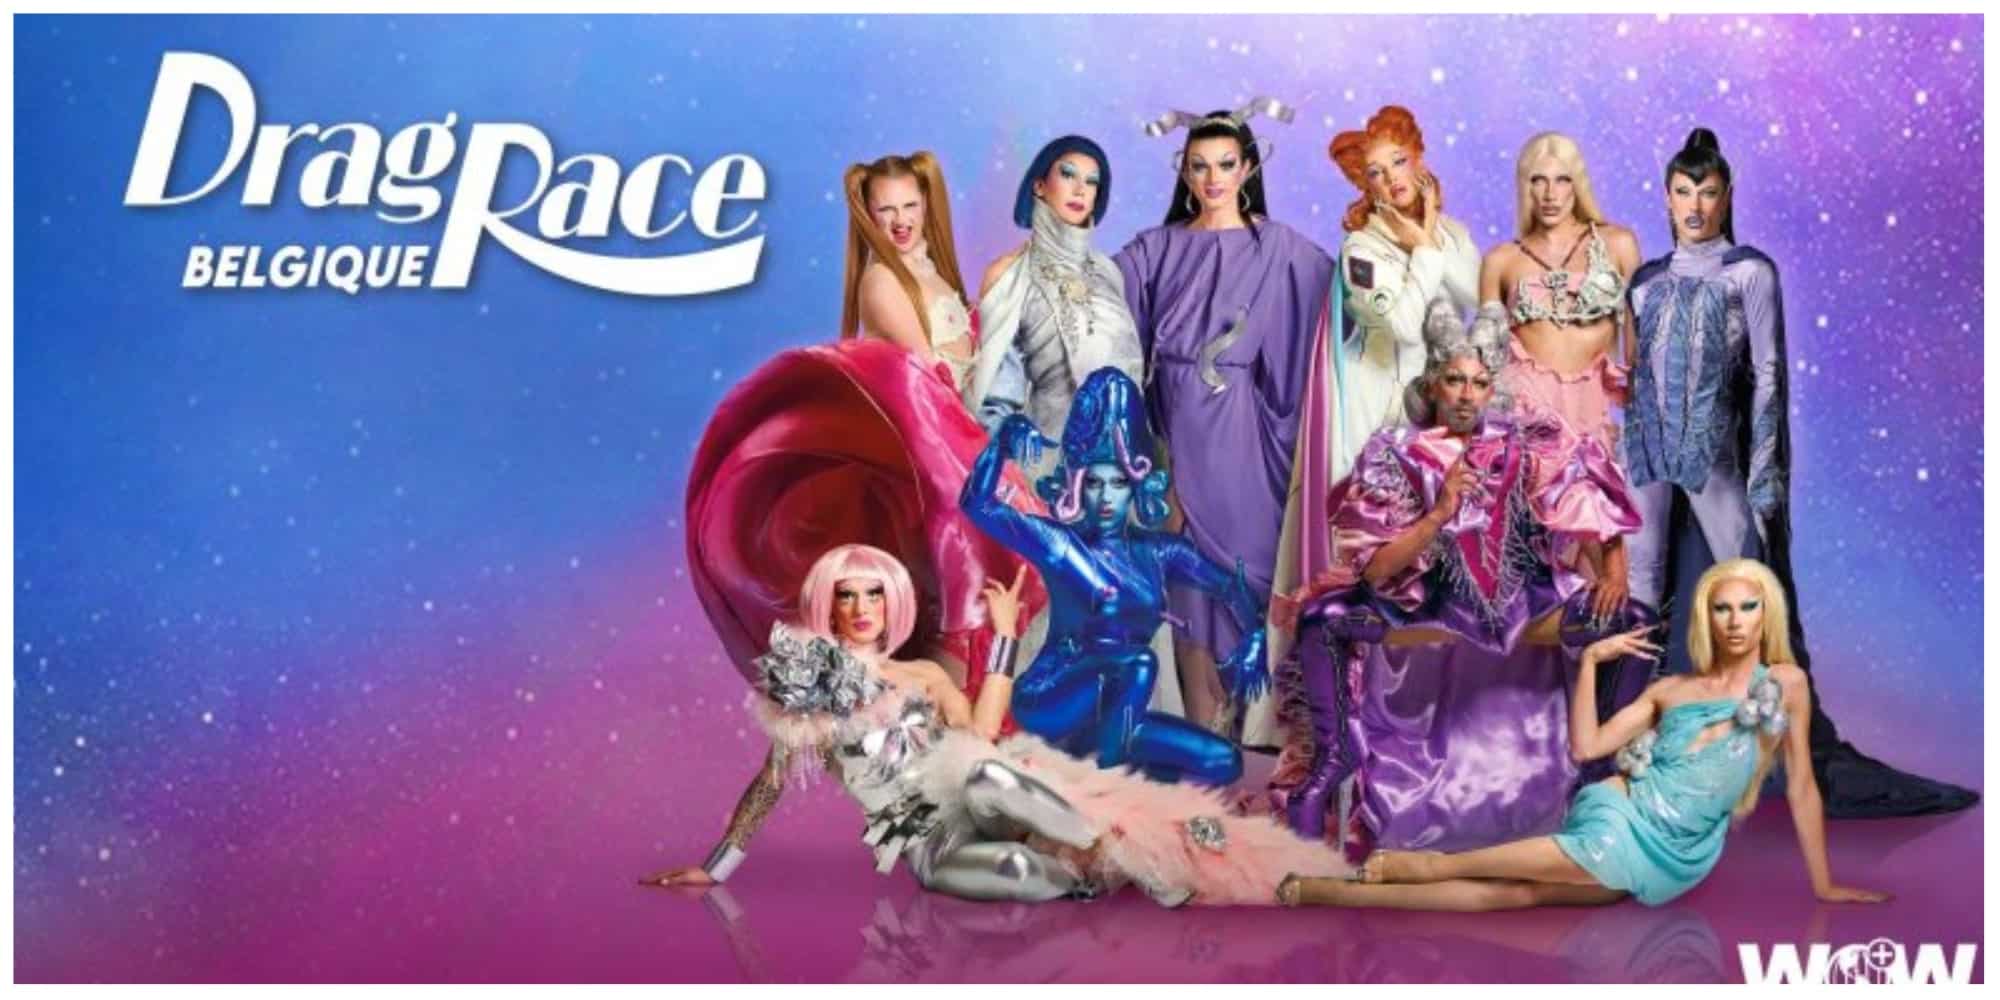 How to watch Drag Race Belgique episodes?